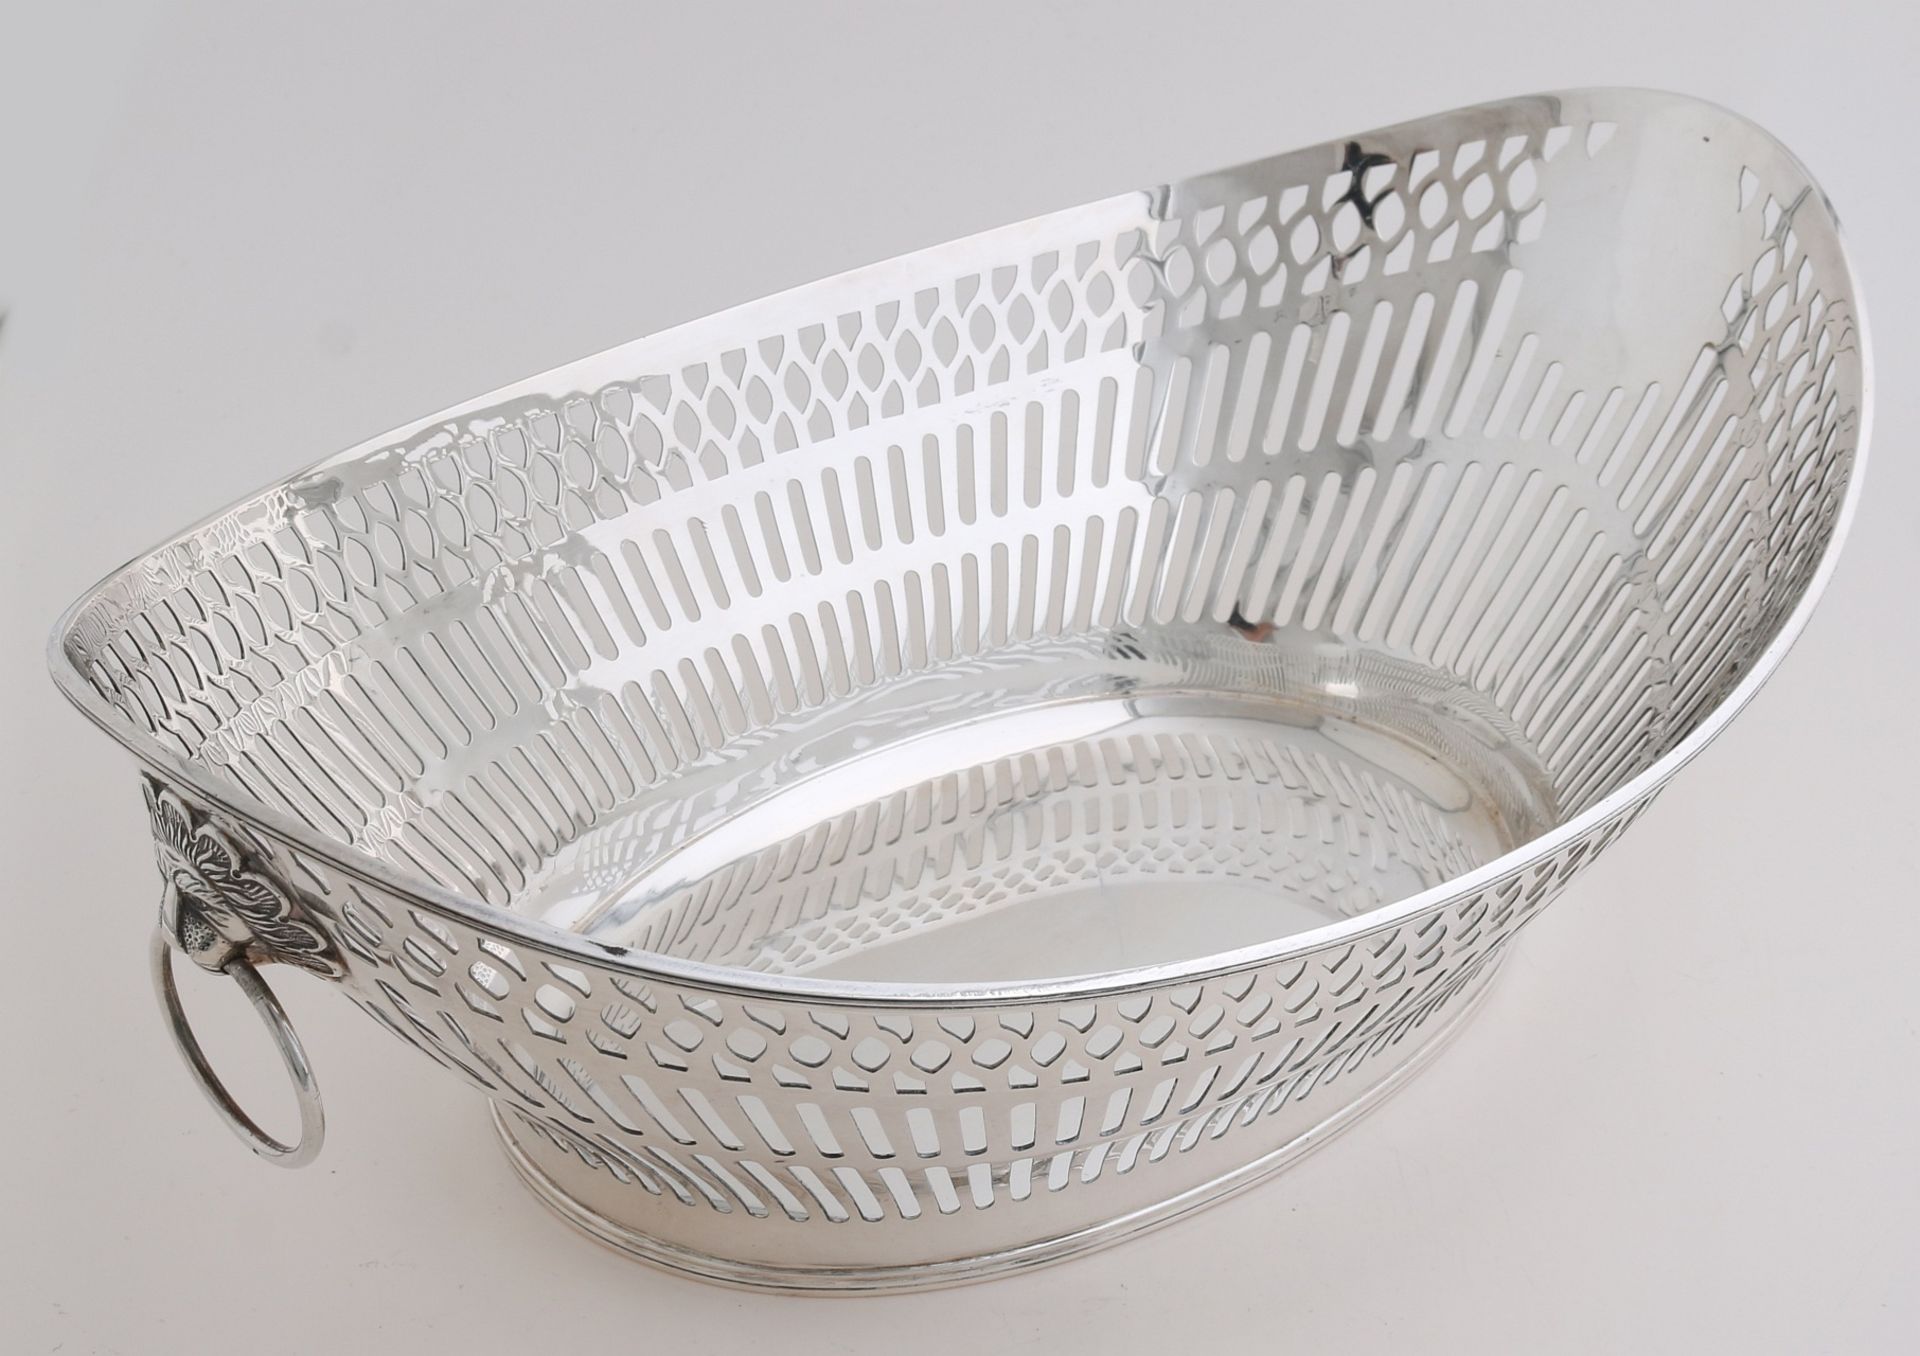 Silver bread basket - Image 2 of 2